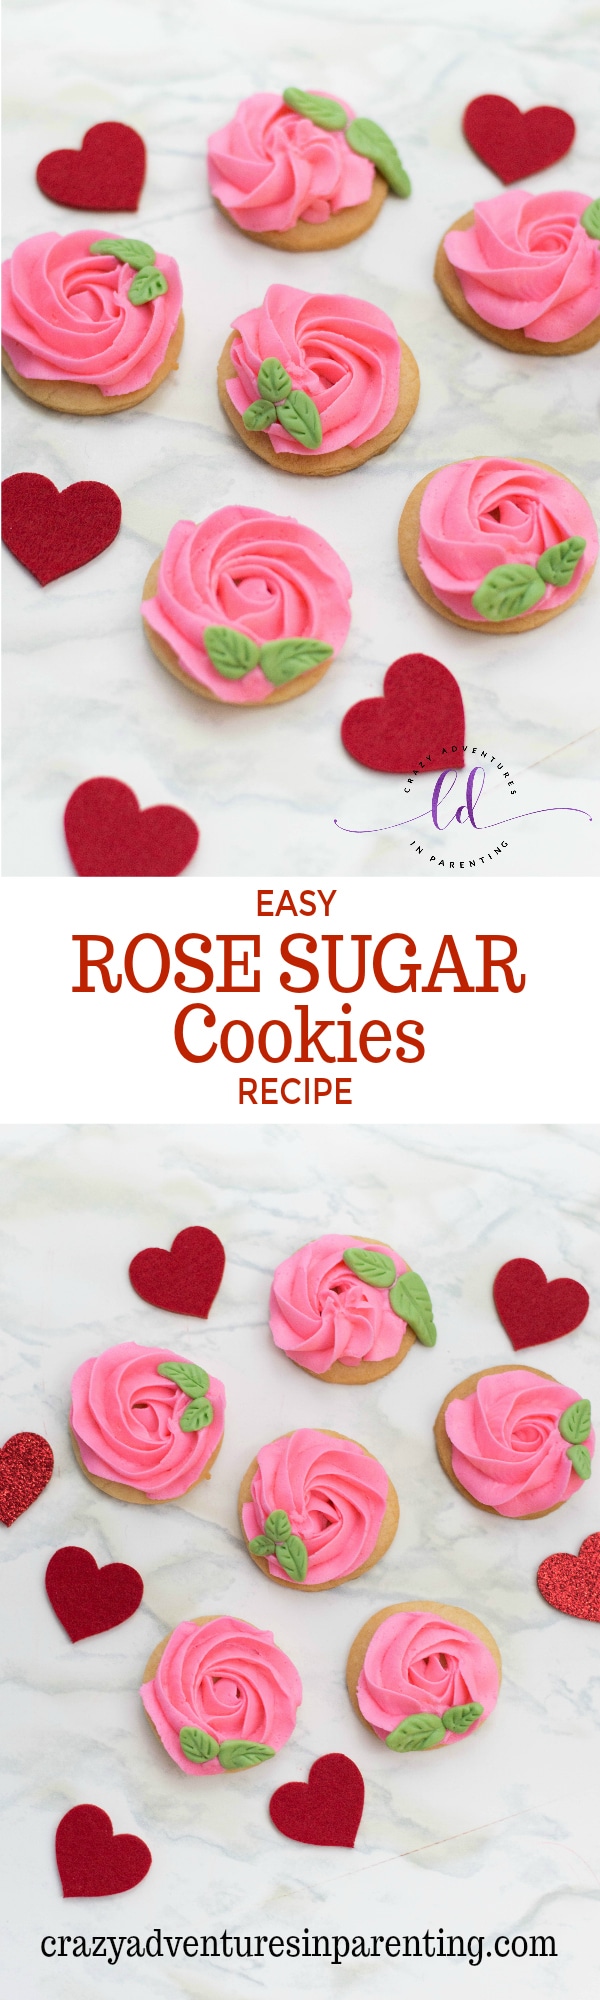 Easy Rose Sugar Cookies Recipe